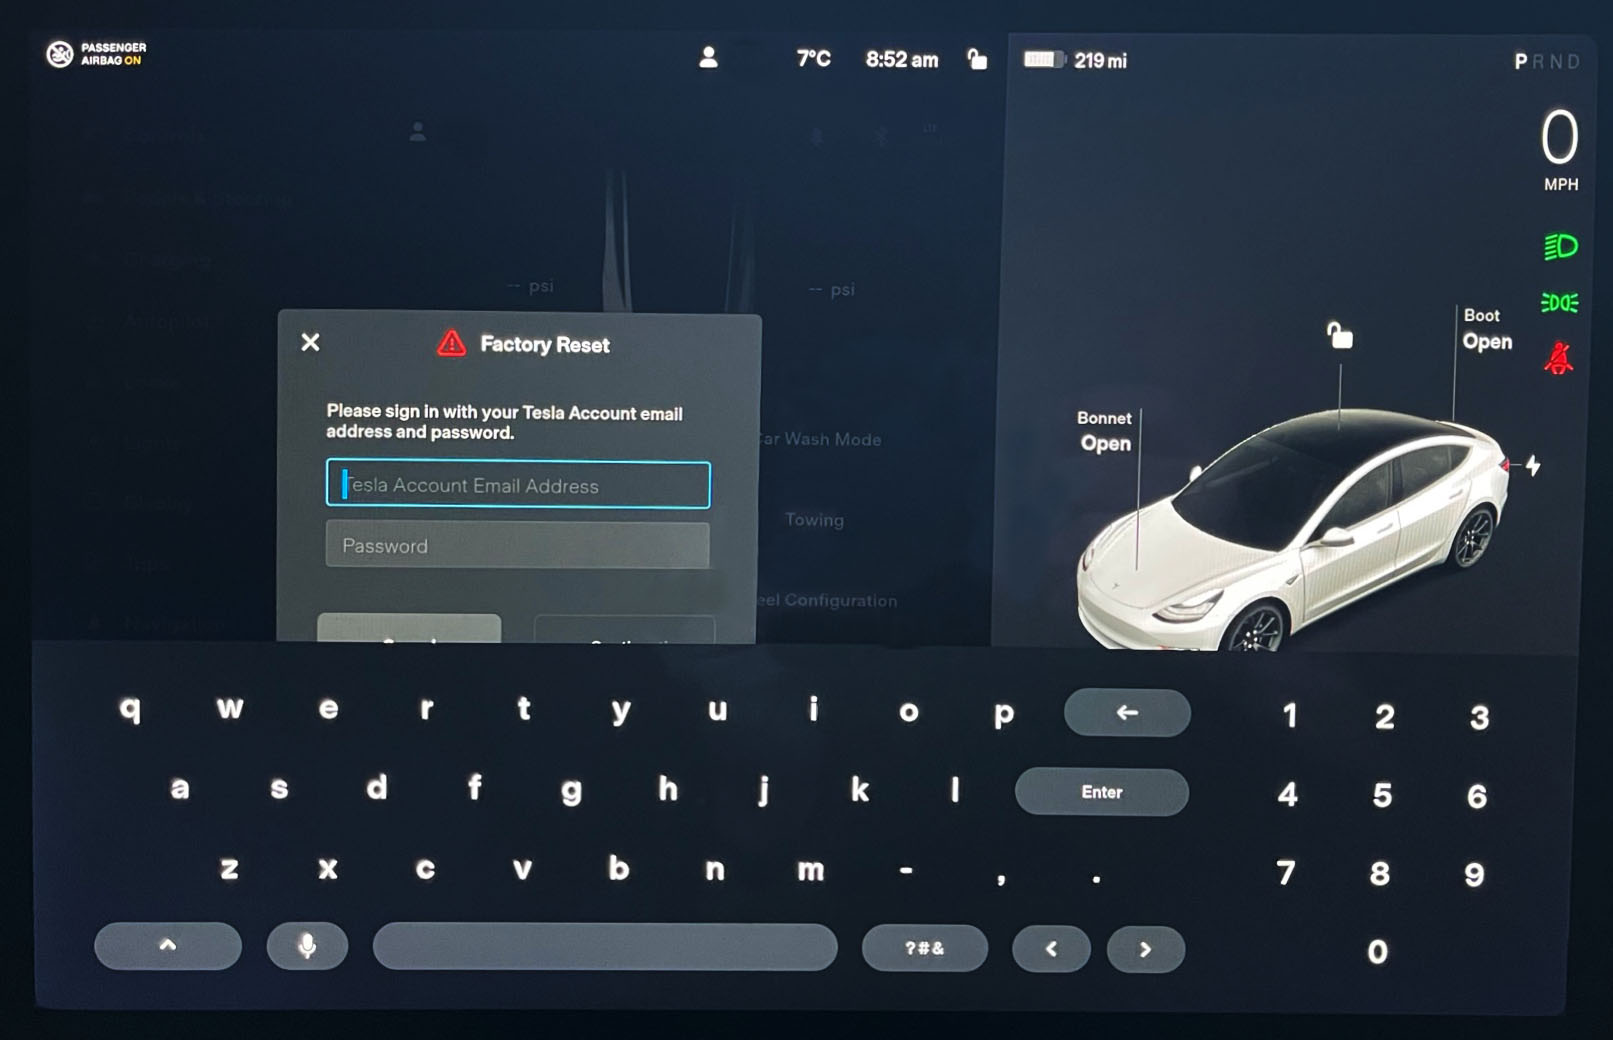 Tesla Reset login screen